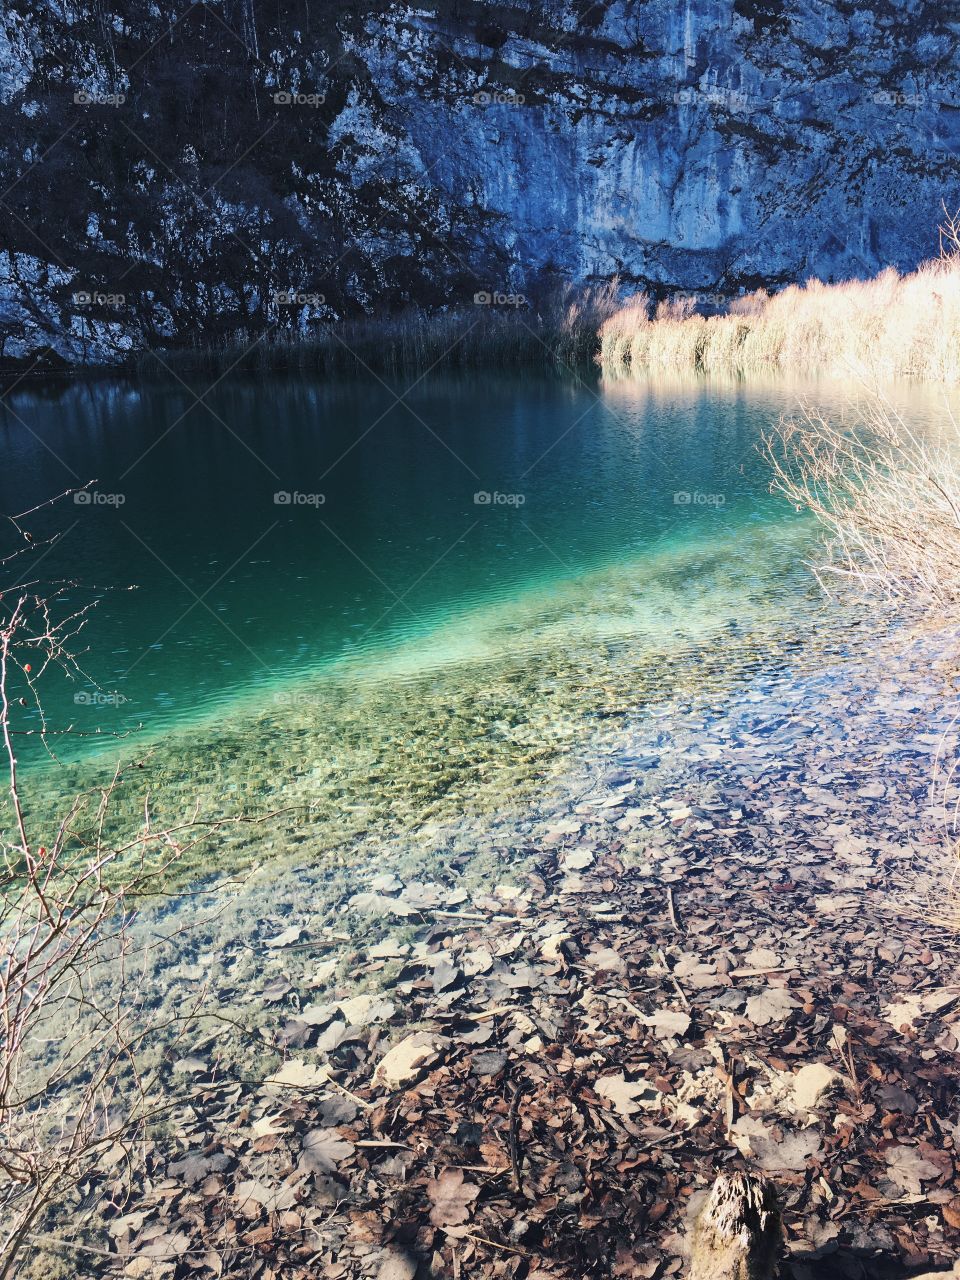 Emerald Green Waters of Plitvica Lakes in Croatia